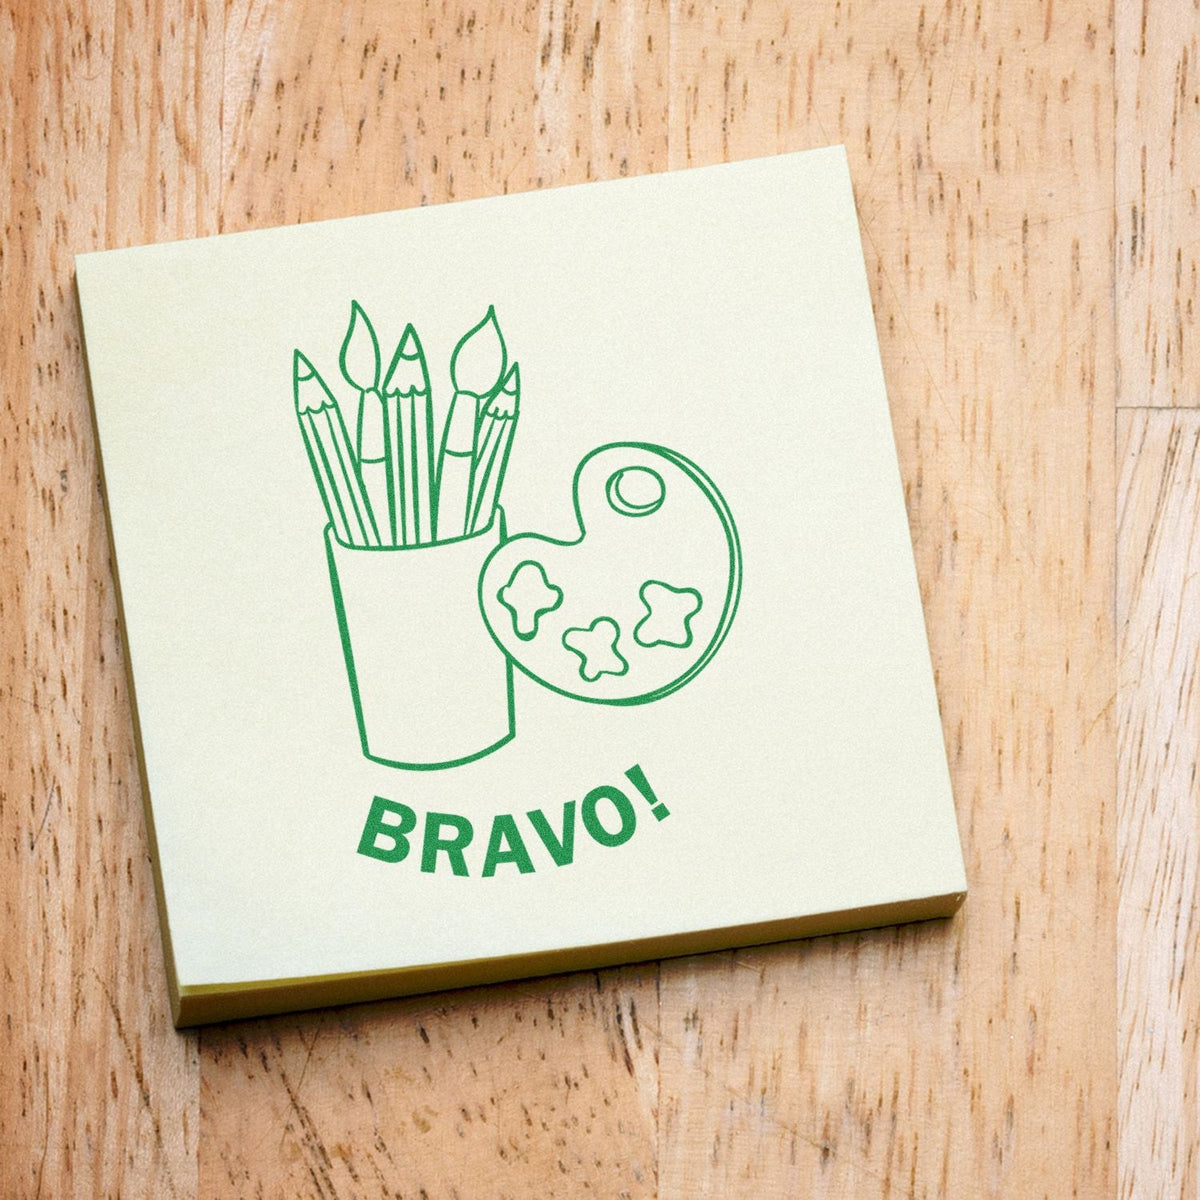 Self-Inking Round Bravo Stamp In Use